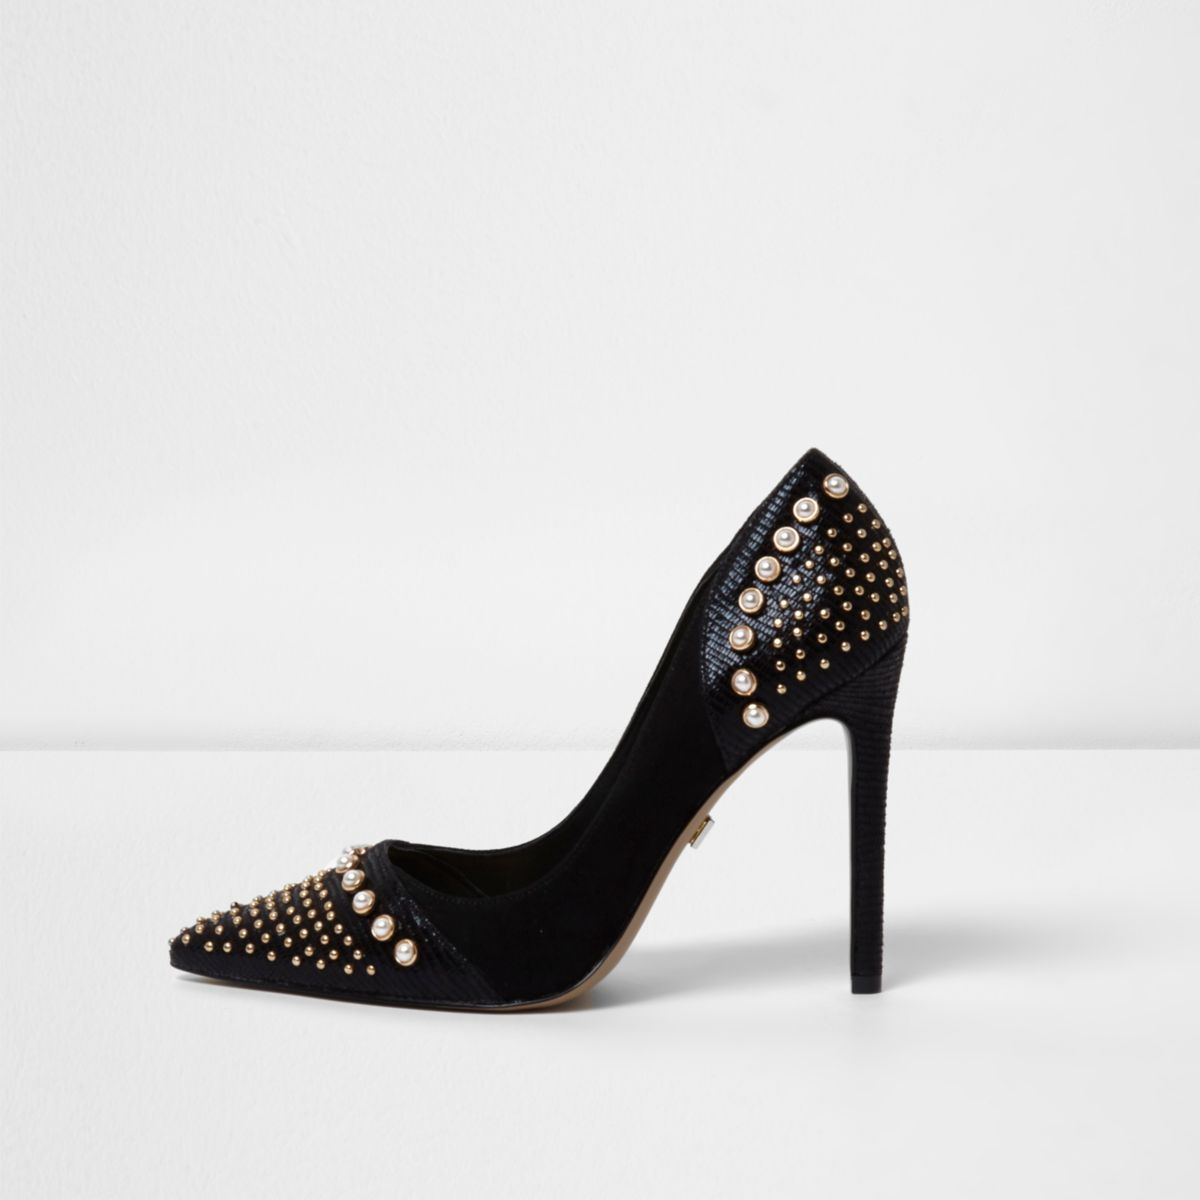 Black faux pearl embellished court shoes - Shoes & Boots - Sale - women